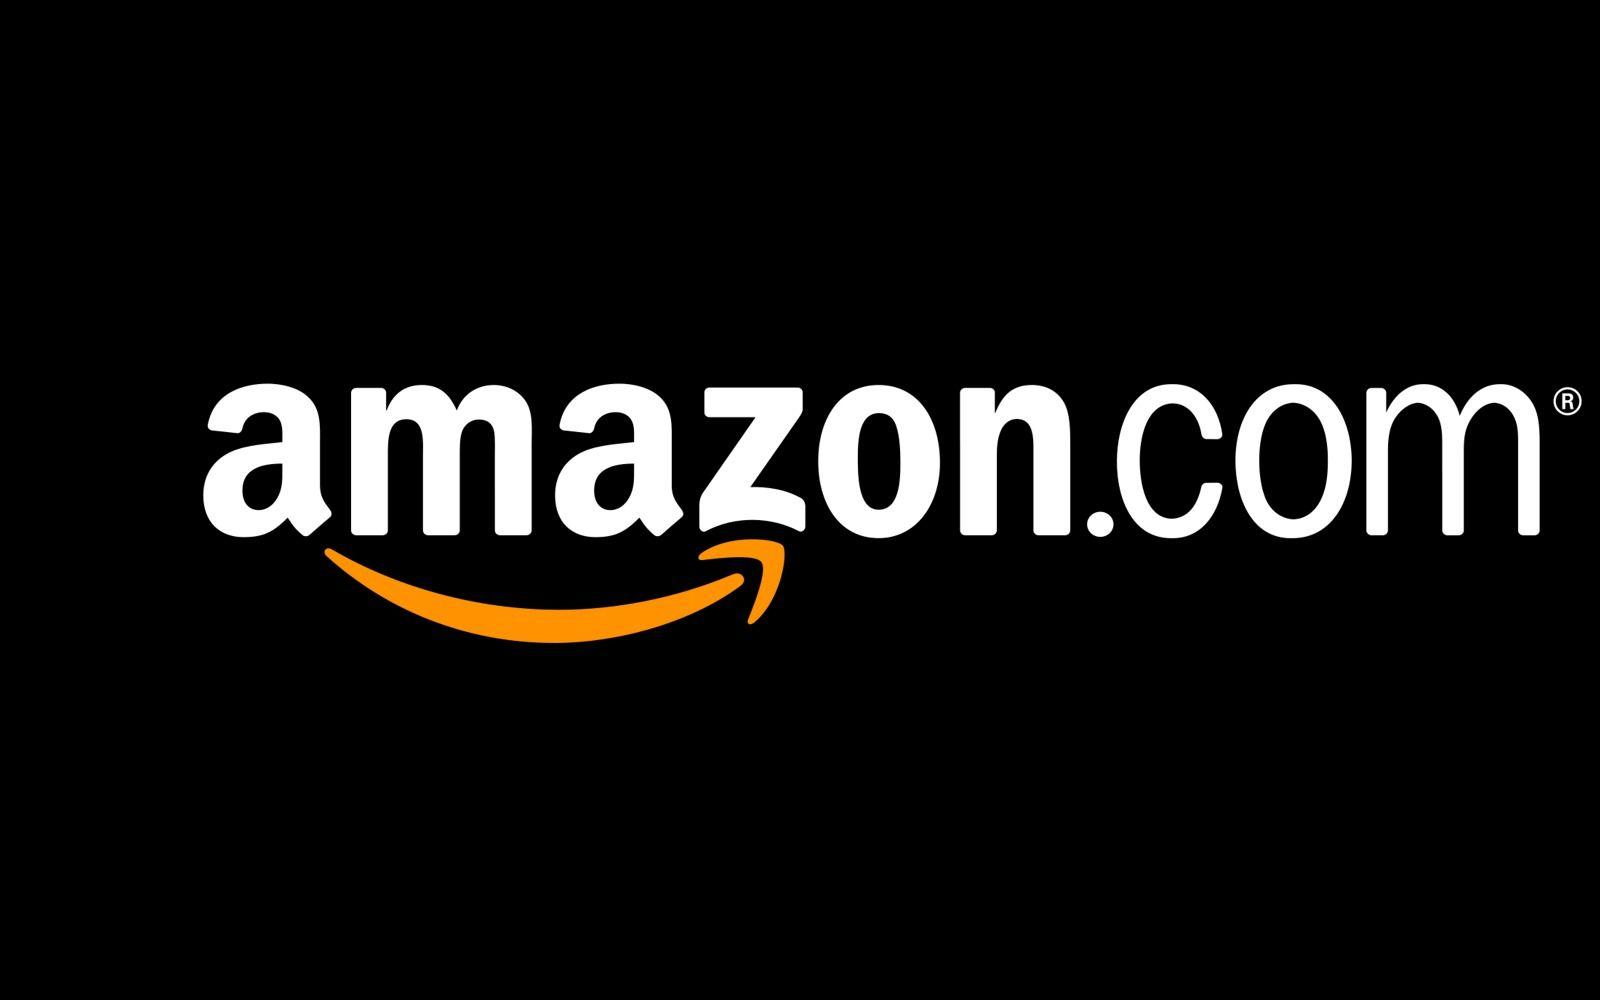 Amazon Inc Logo - Amazon com Logos